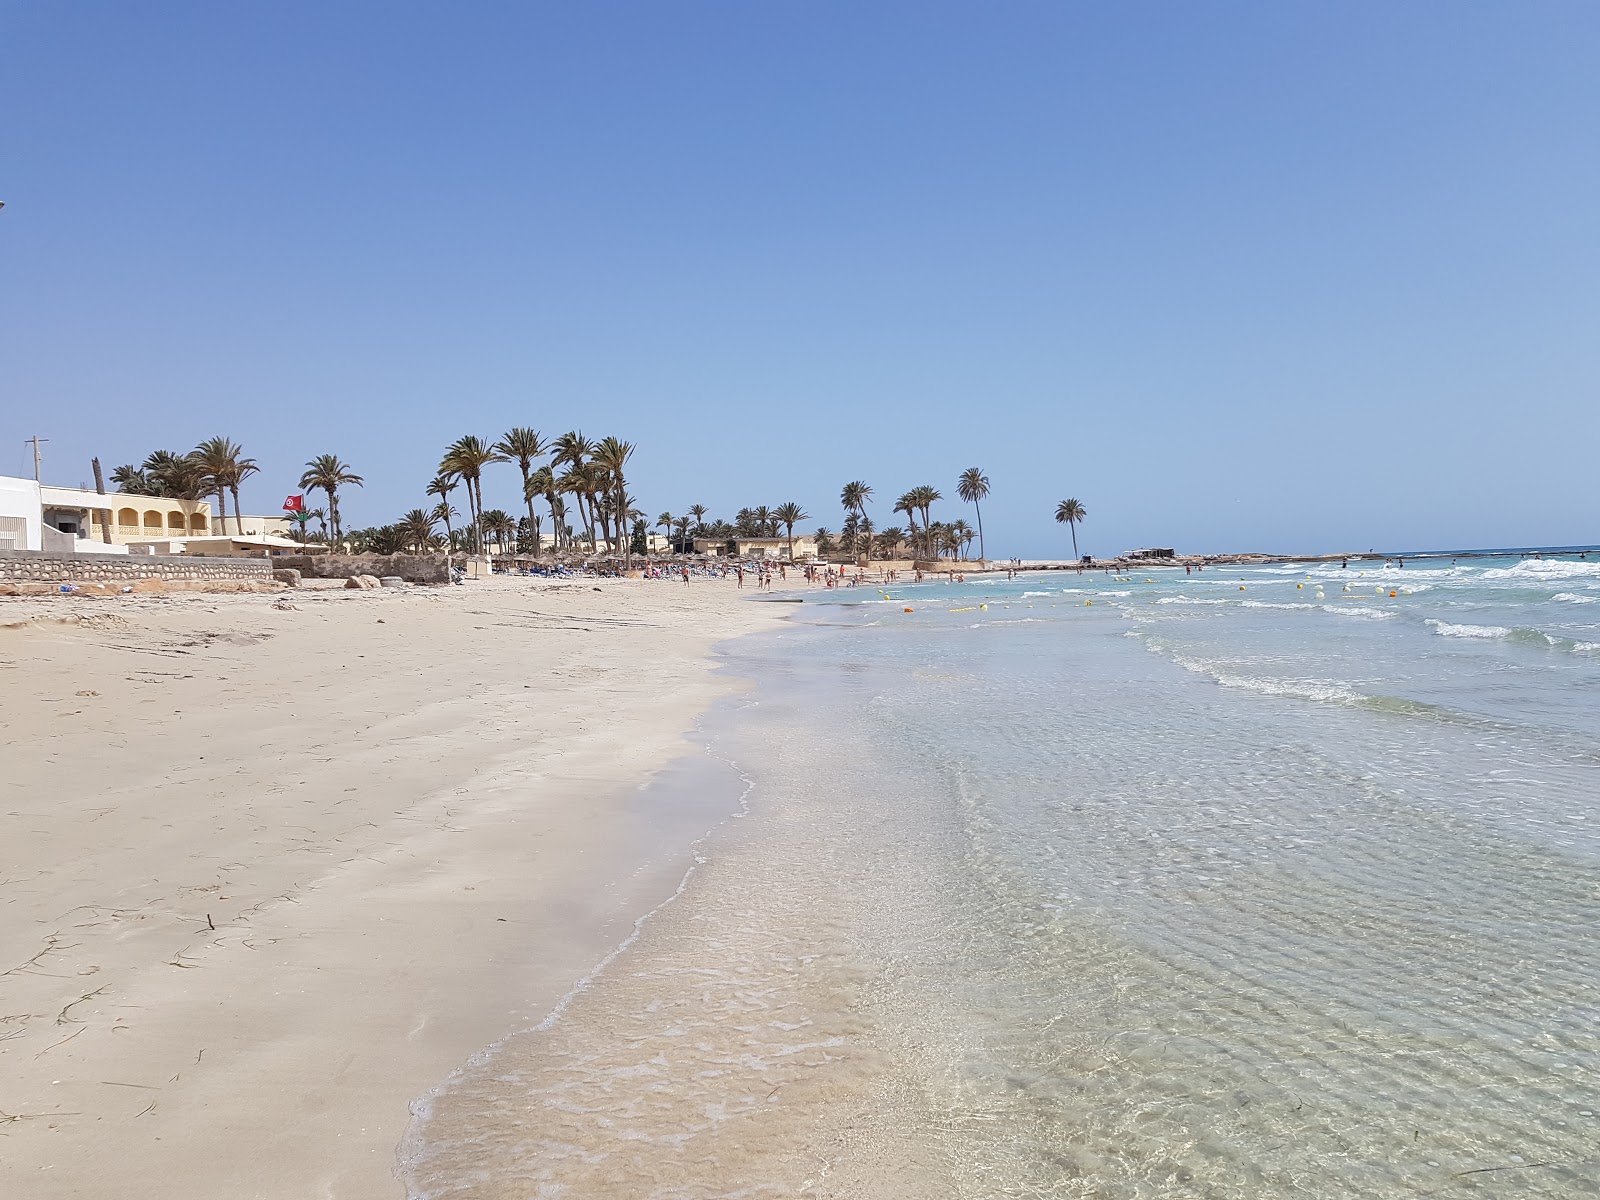 Foto di Al-Swehel beach con una superficie del sabbia bianca